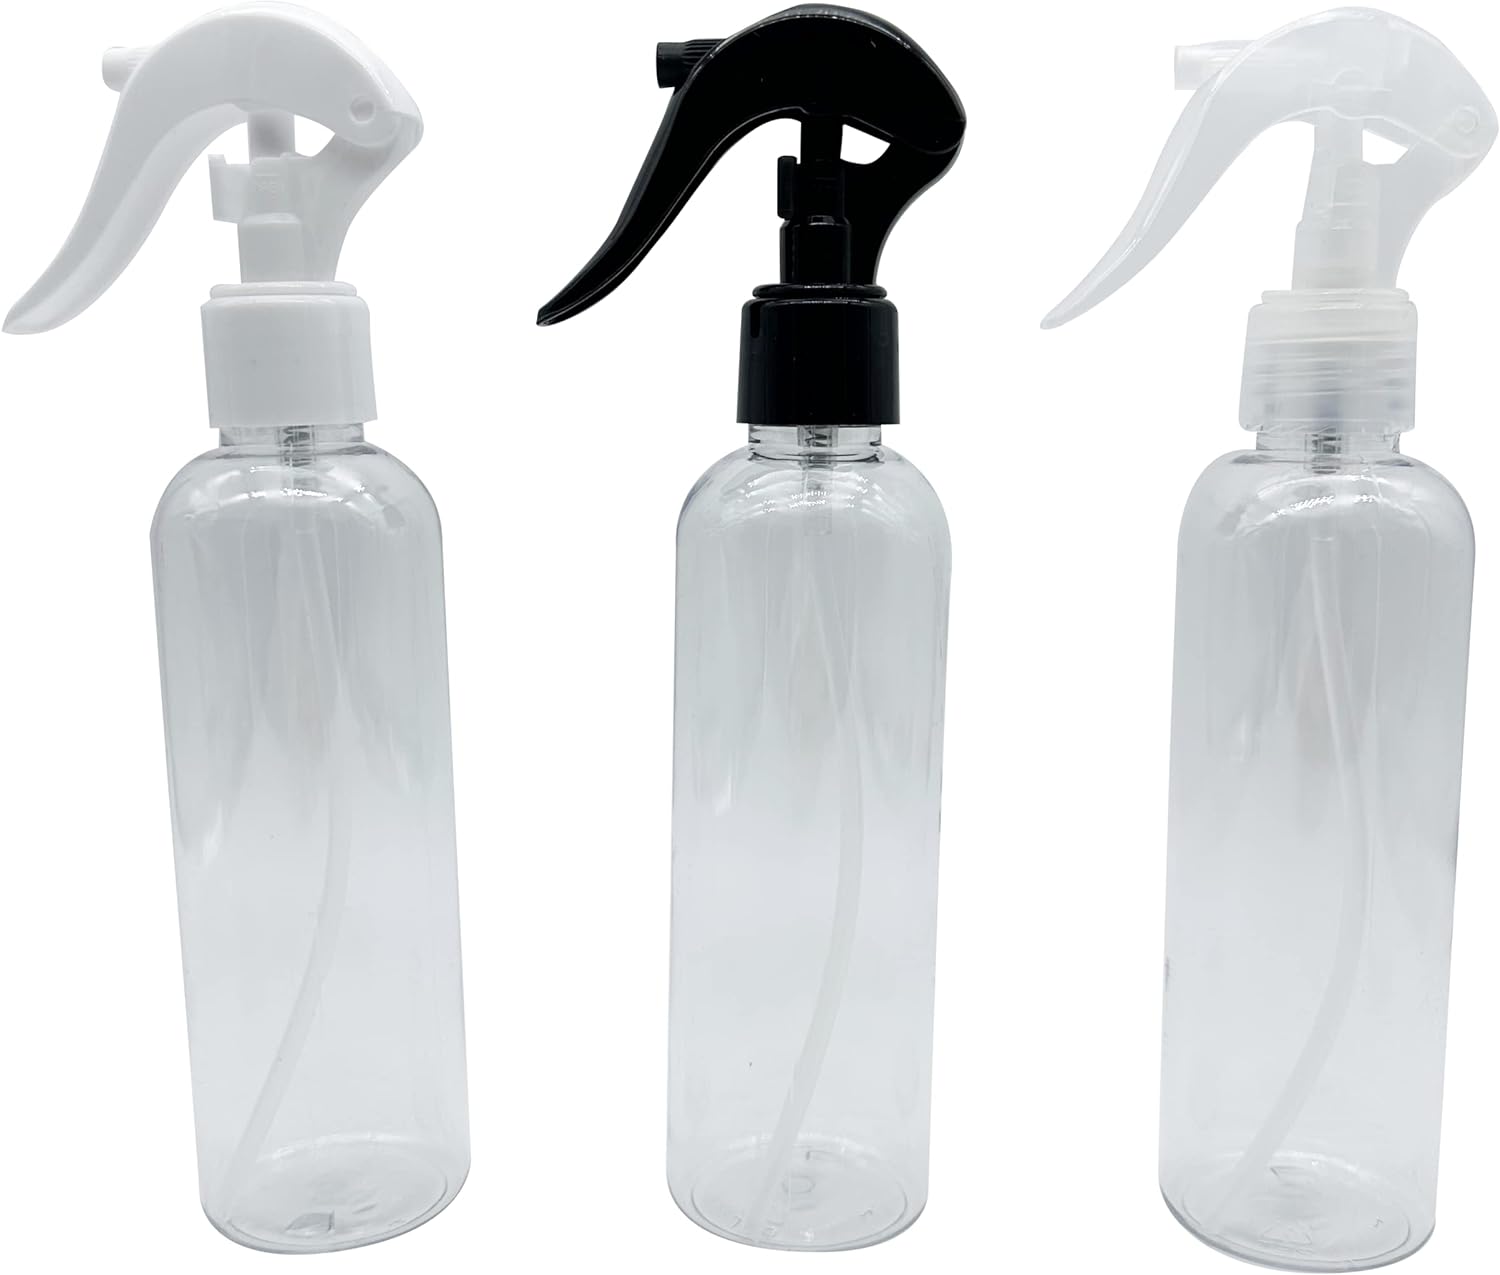 GERILEO - Pack 3 Botes Spray Vacíos de 200 ml - Para Hogar, Limpieza, Pelo, Ambientador, Peluquería, Plantas, Desinfectante - Botellas Spray Reutilizable, Pulverizador Rellenable, Vaporizador, Dispensador